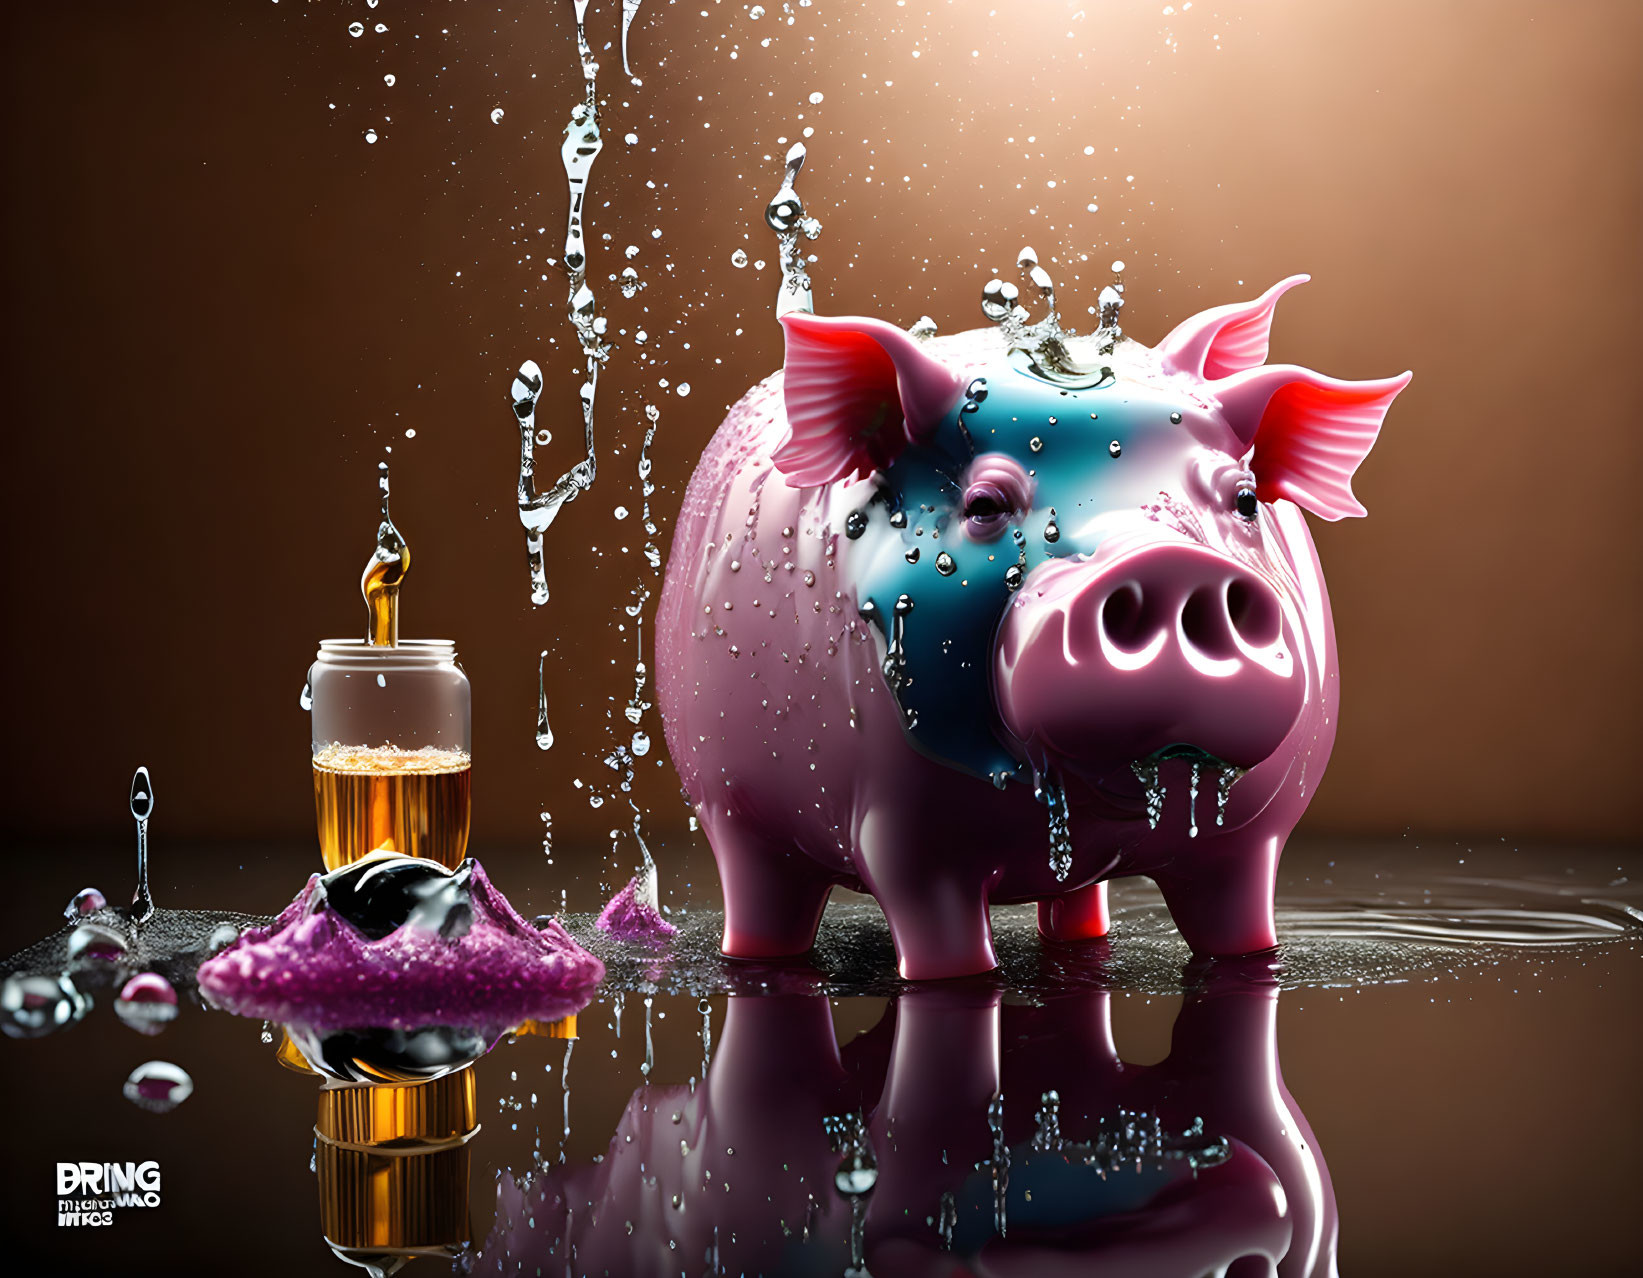 Pink piggy bank with water splash, beer, and sponge on dark background